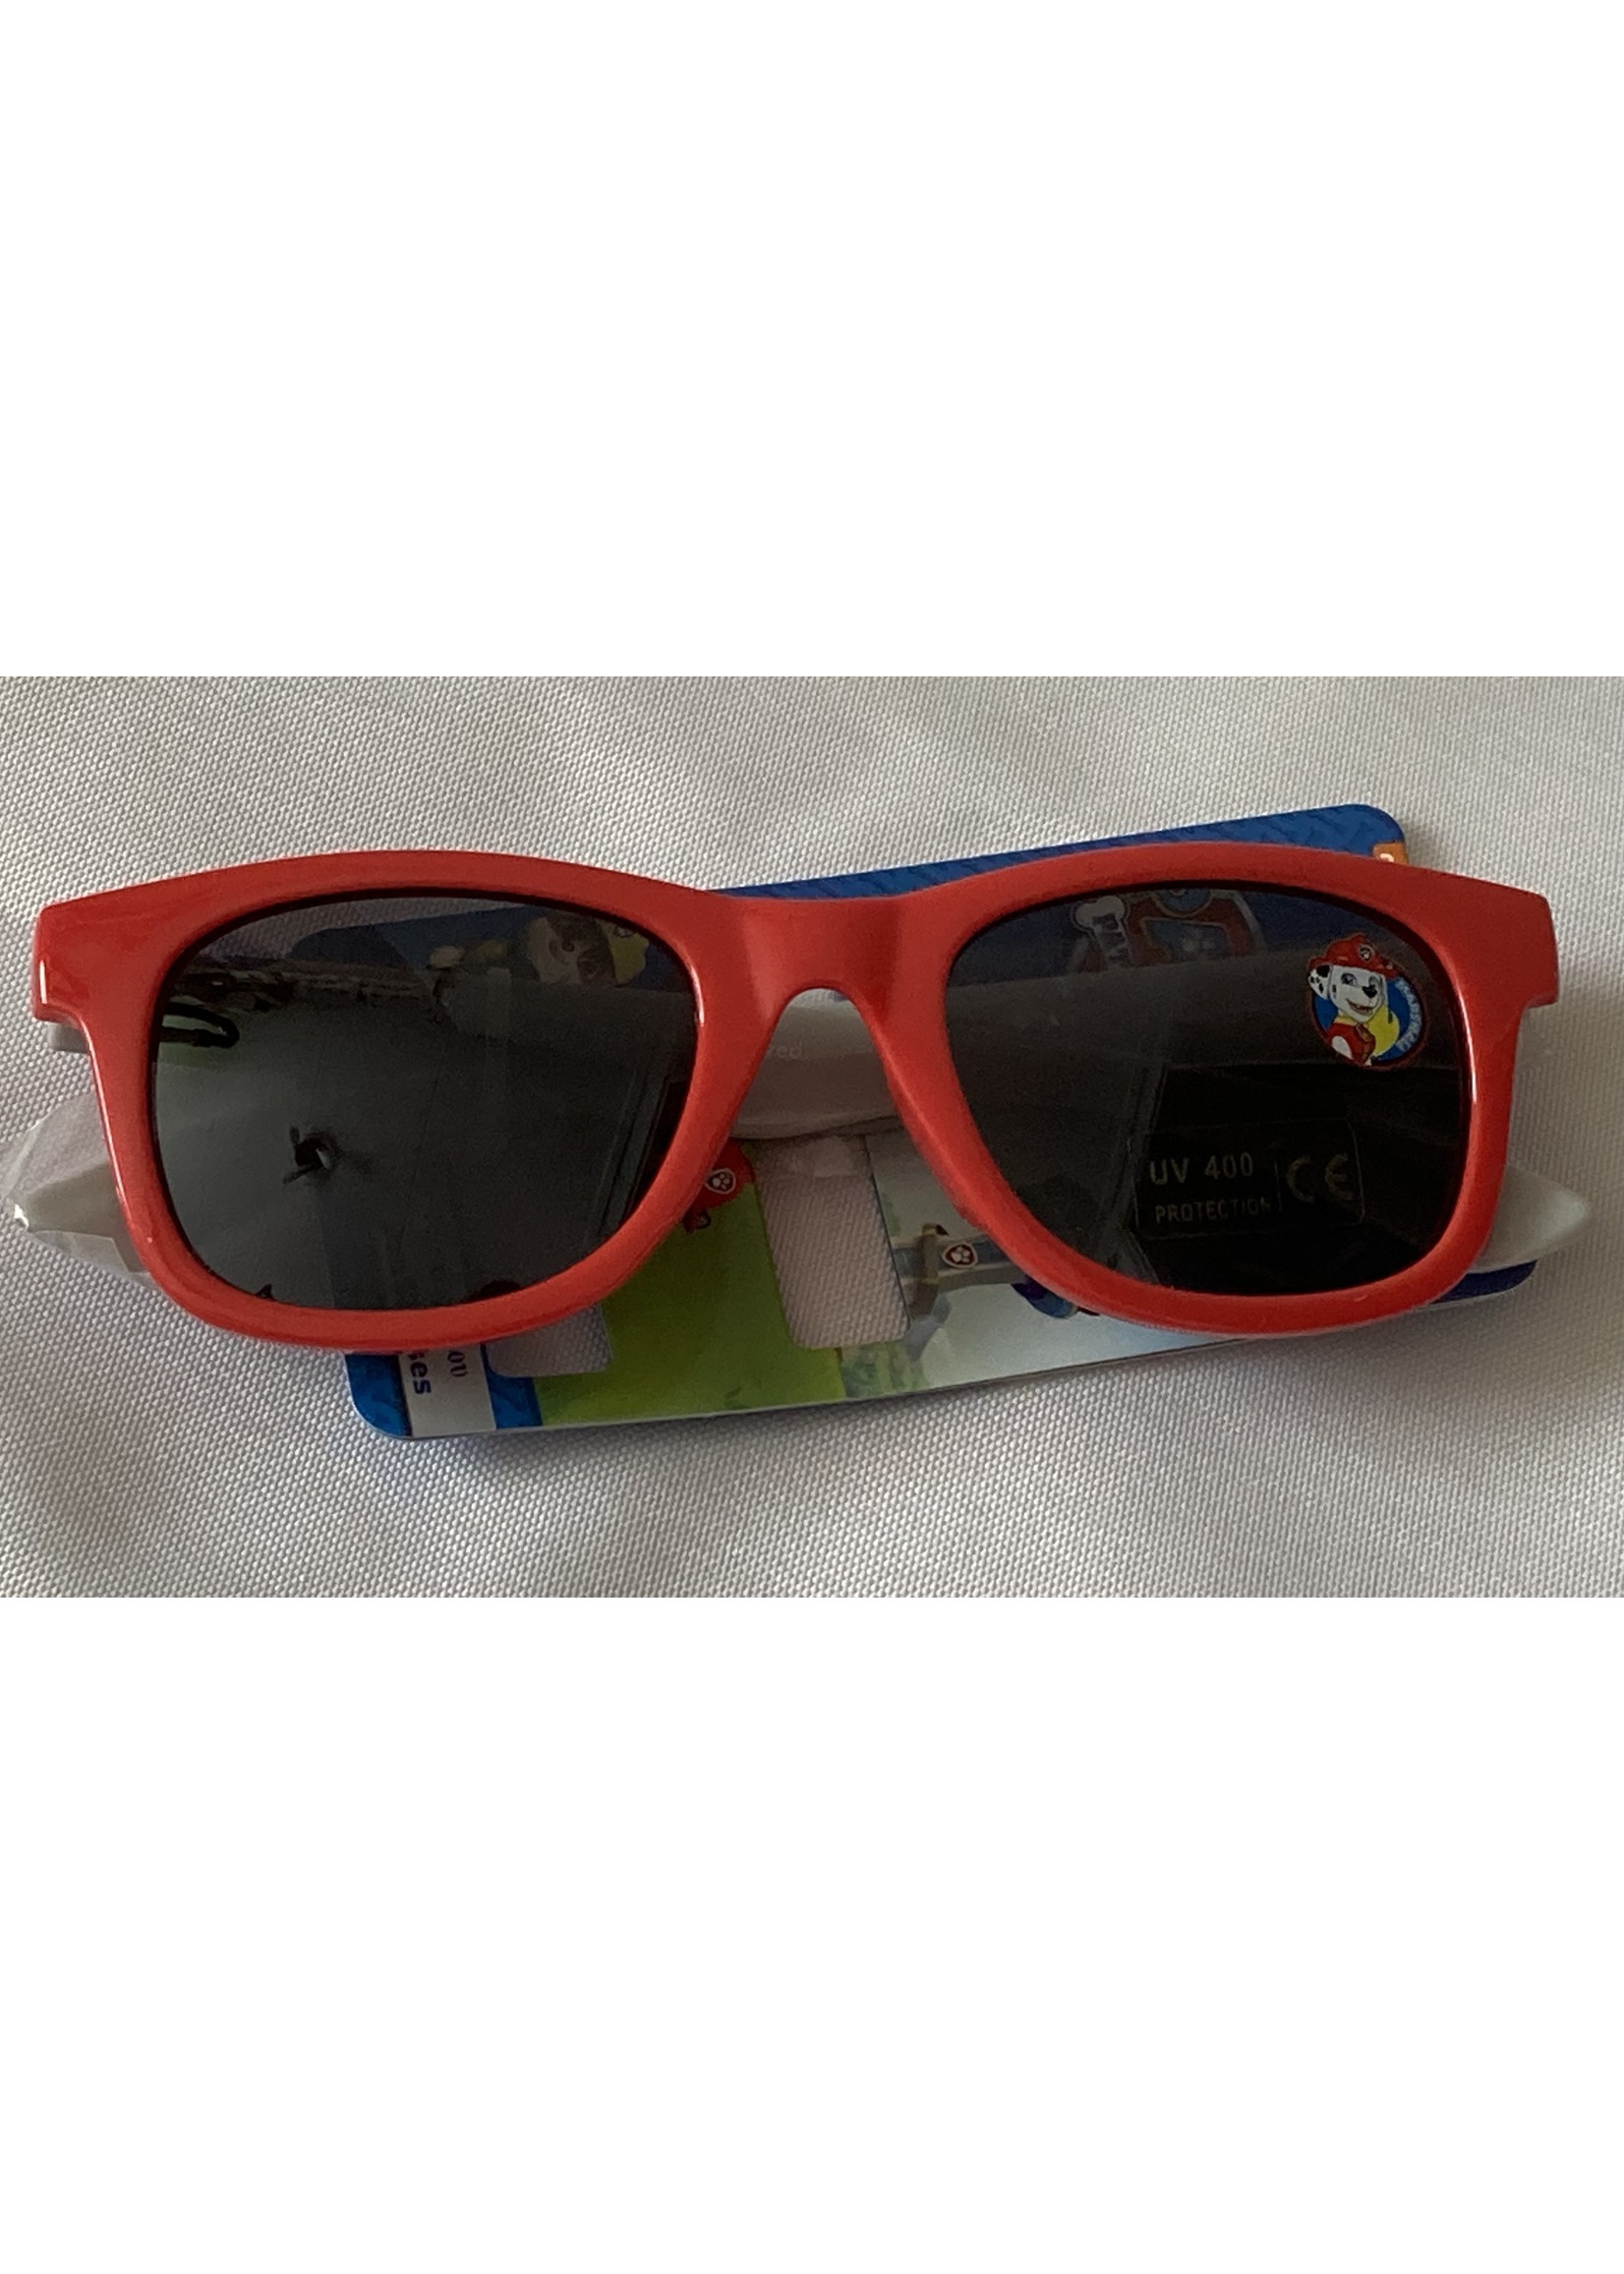 Nickelodeon Paw Patrol sunglasses from Nickelodeon red